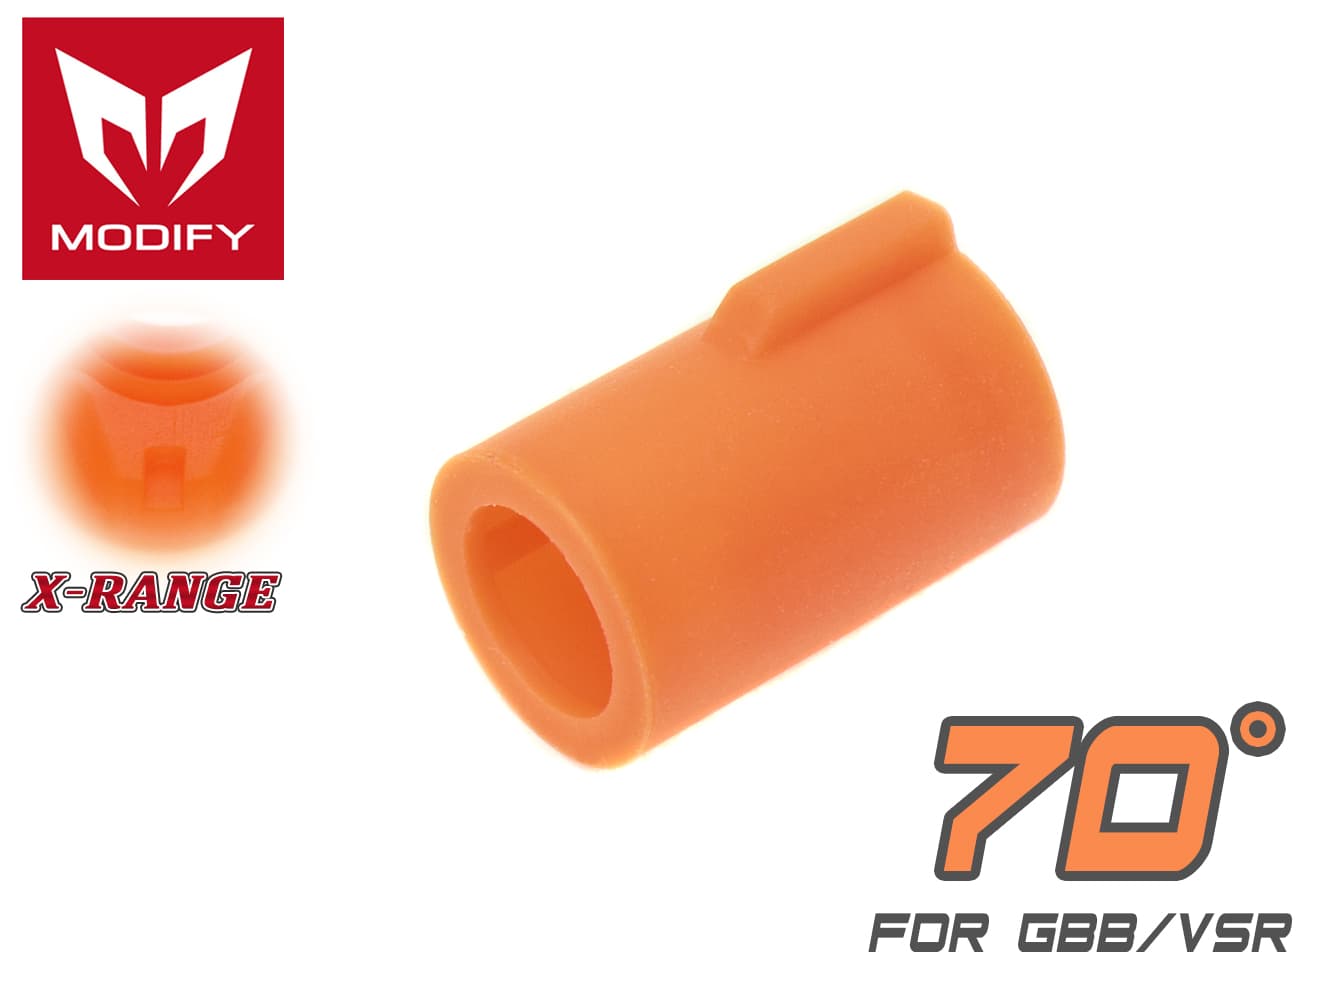 MODIFY X-Range チャンバーパッキン GBB/ VSR-10 70° ◆HOPパッキン 0.3〜0.35gのBB弾に 東京マルイ ガスブロ ハンドガン用 VSR-10にも